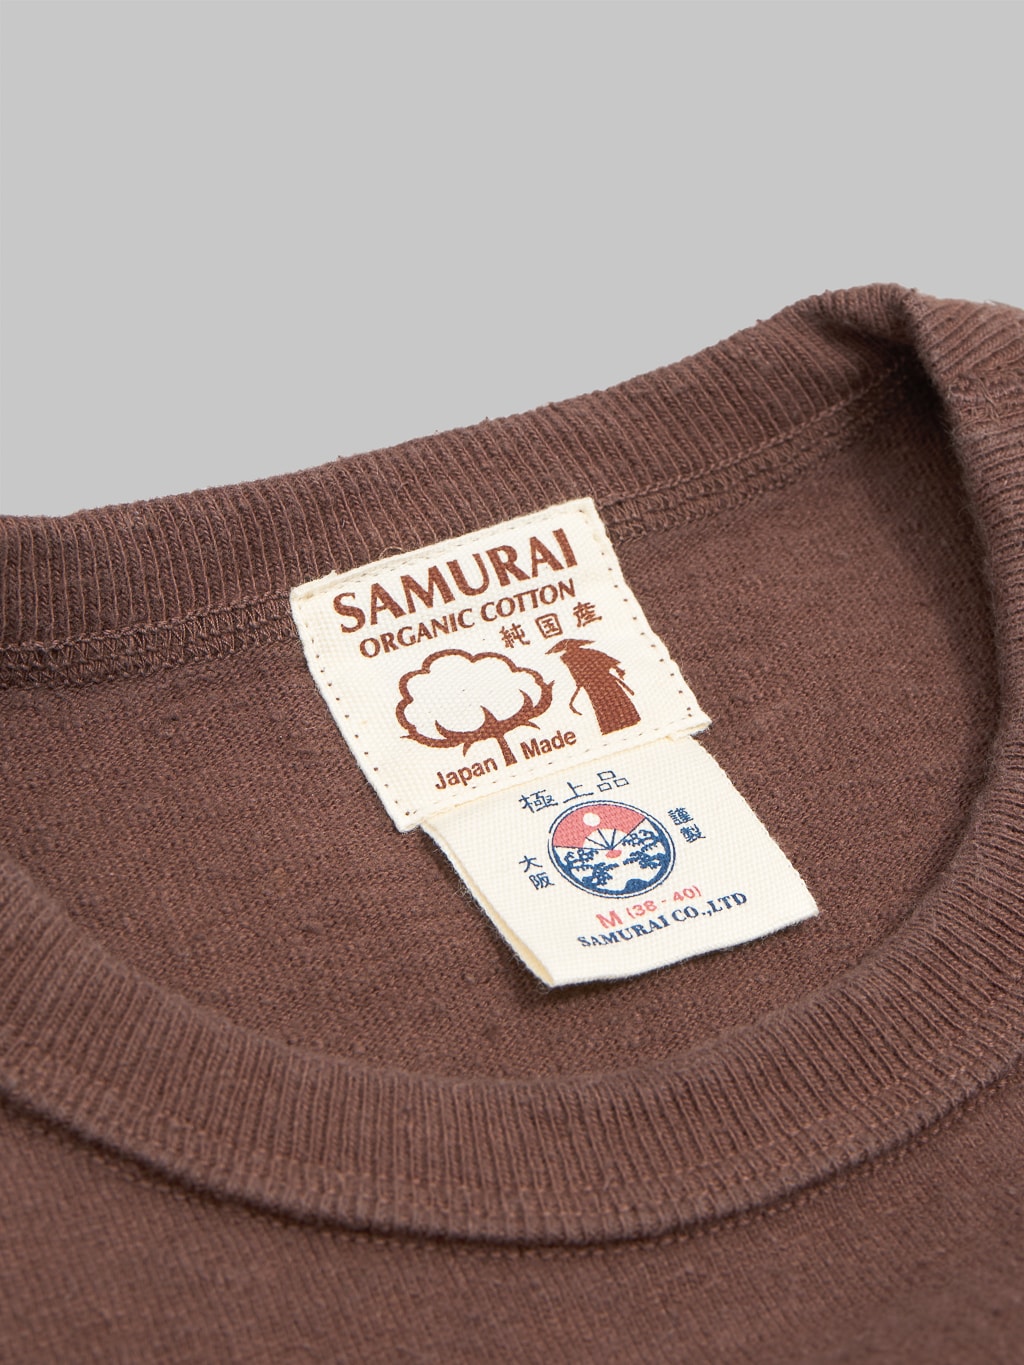 samurai jeans japanese cotton slub crew neck tshirt dark kuri  tag